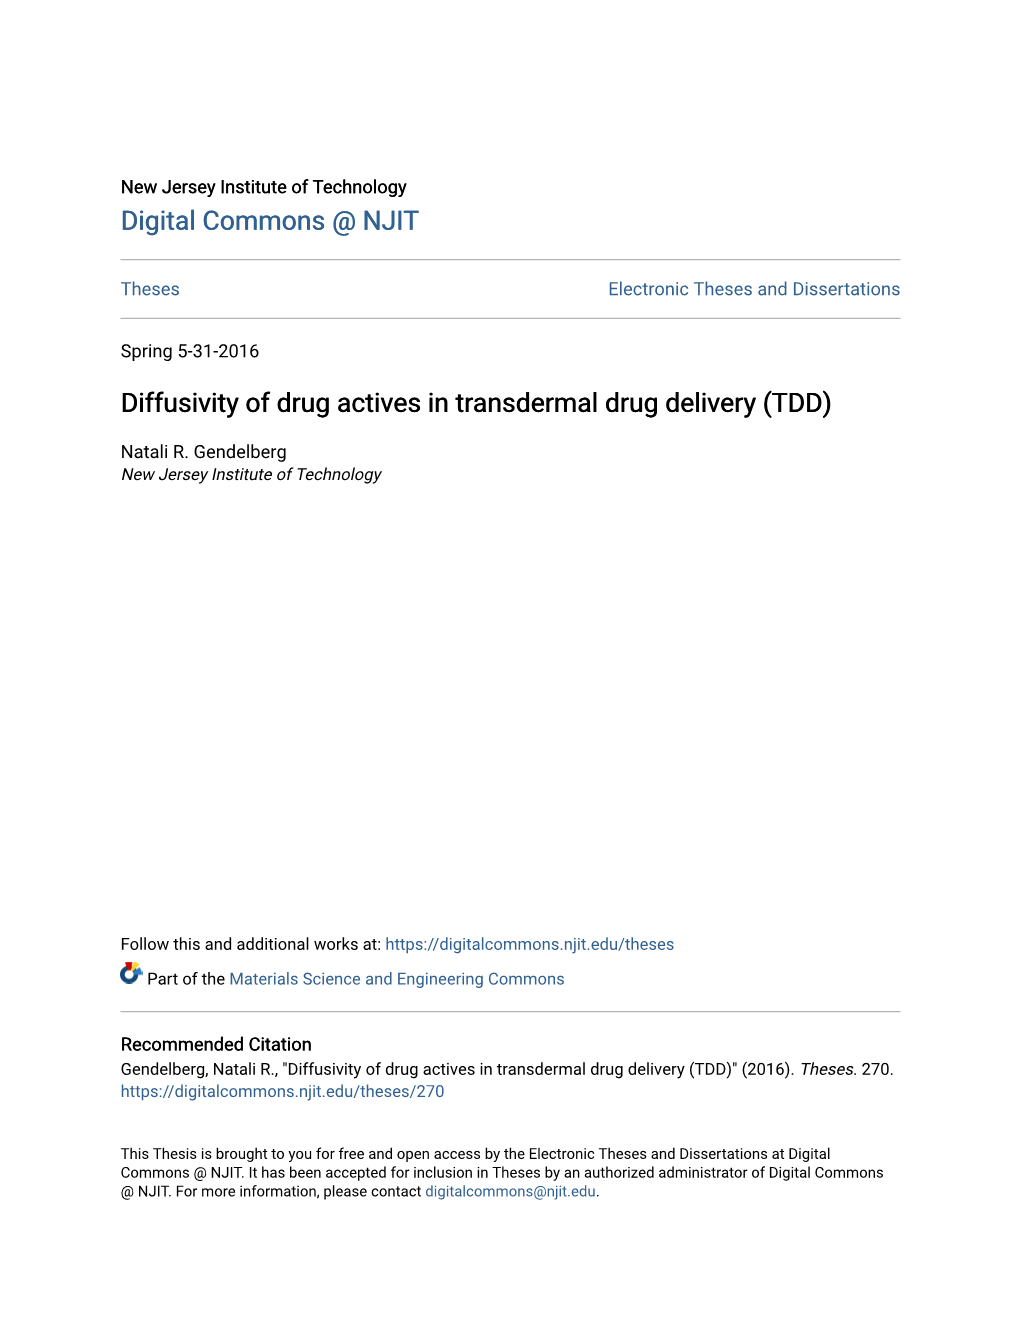 Diffusivity of Drug Actives in Transdermal Drug Delivery (TDD)